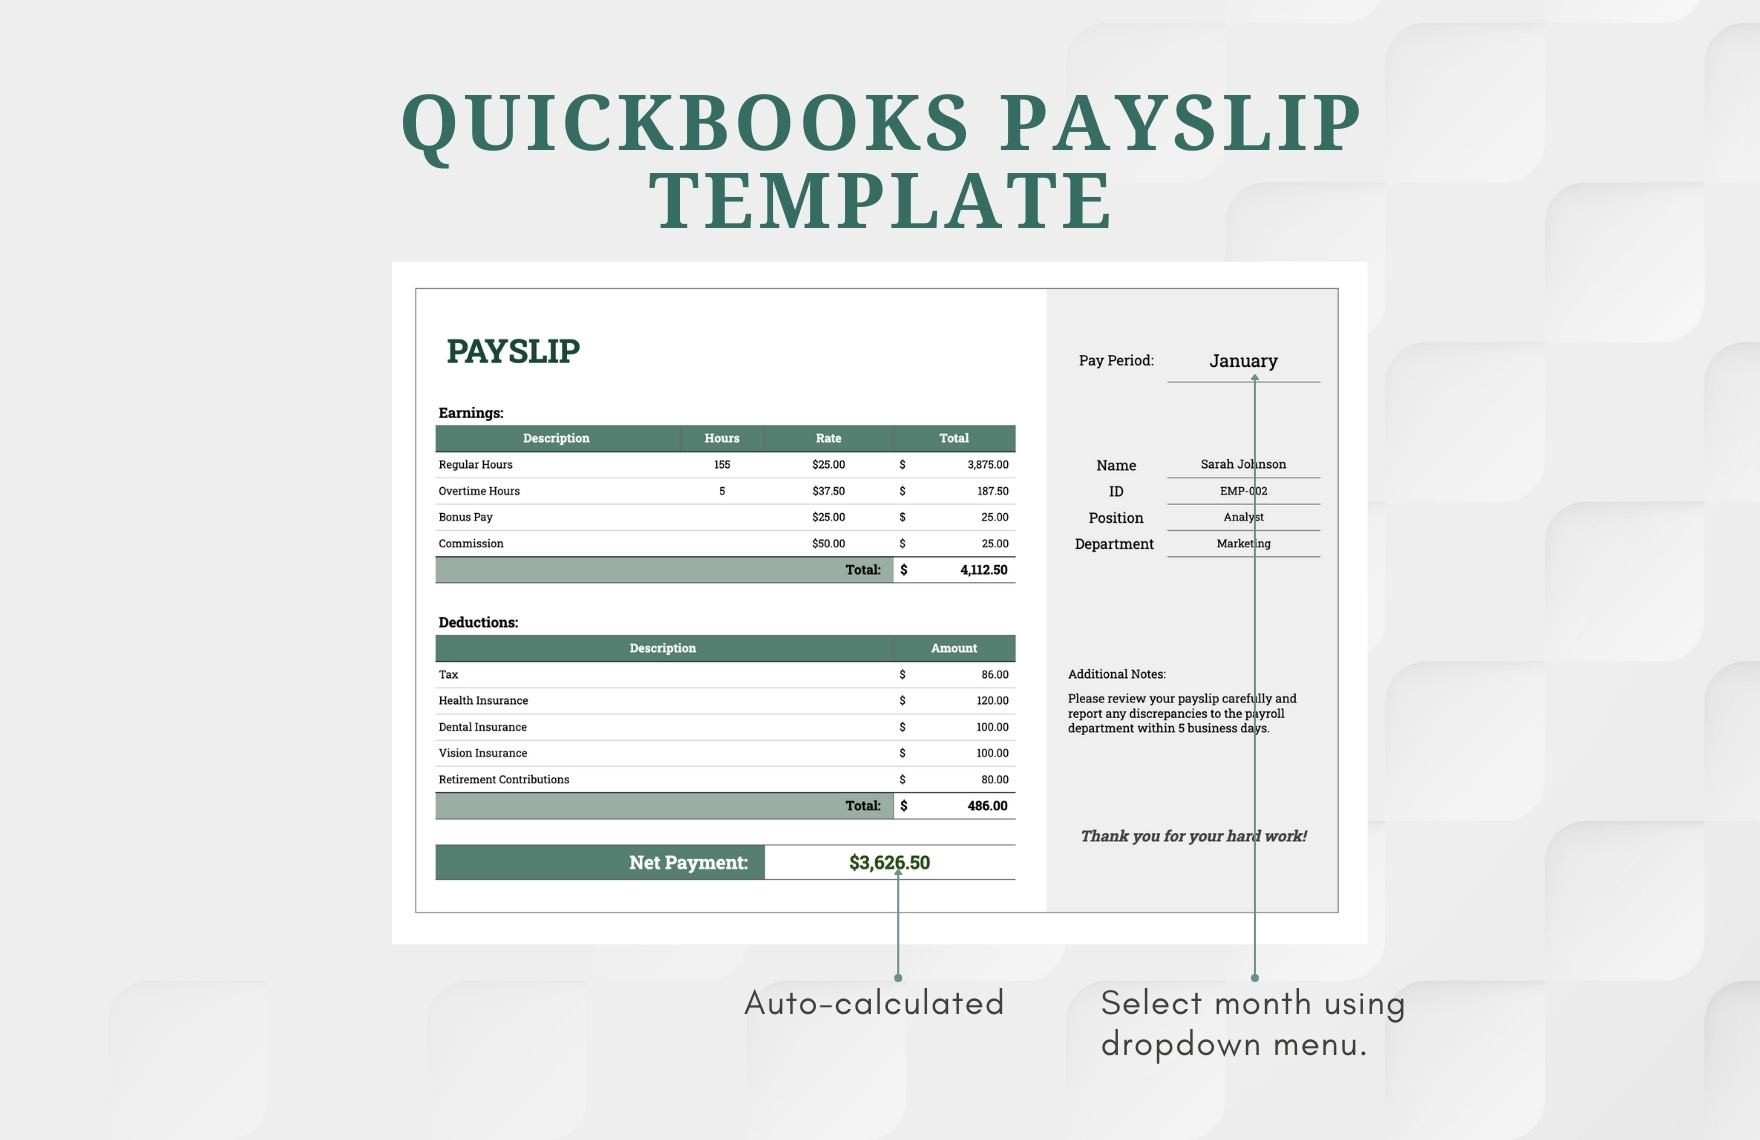 QuickBooks Payslip Template